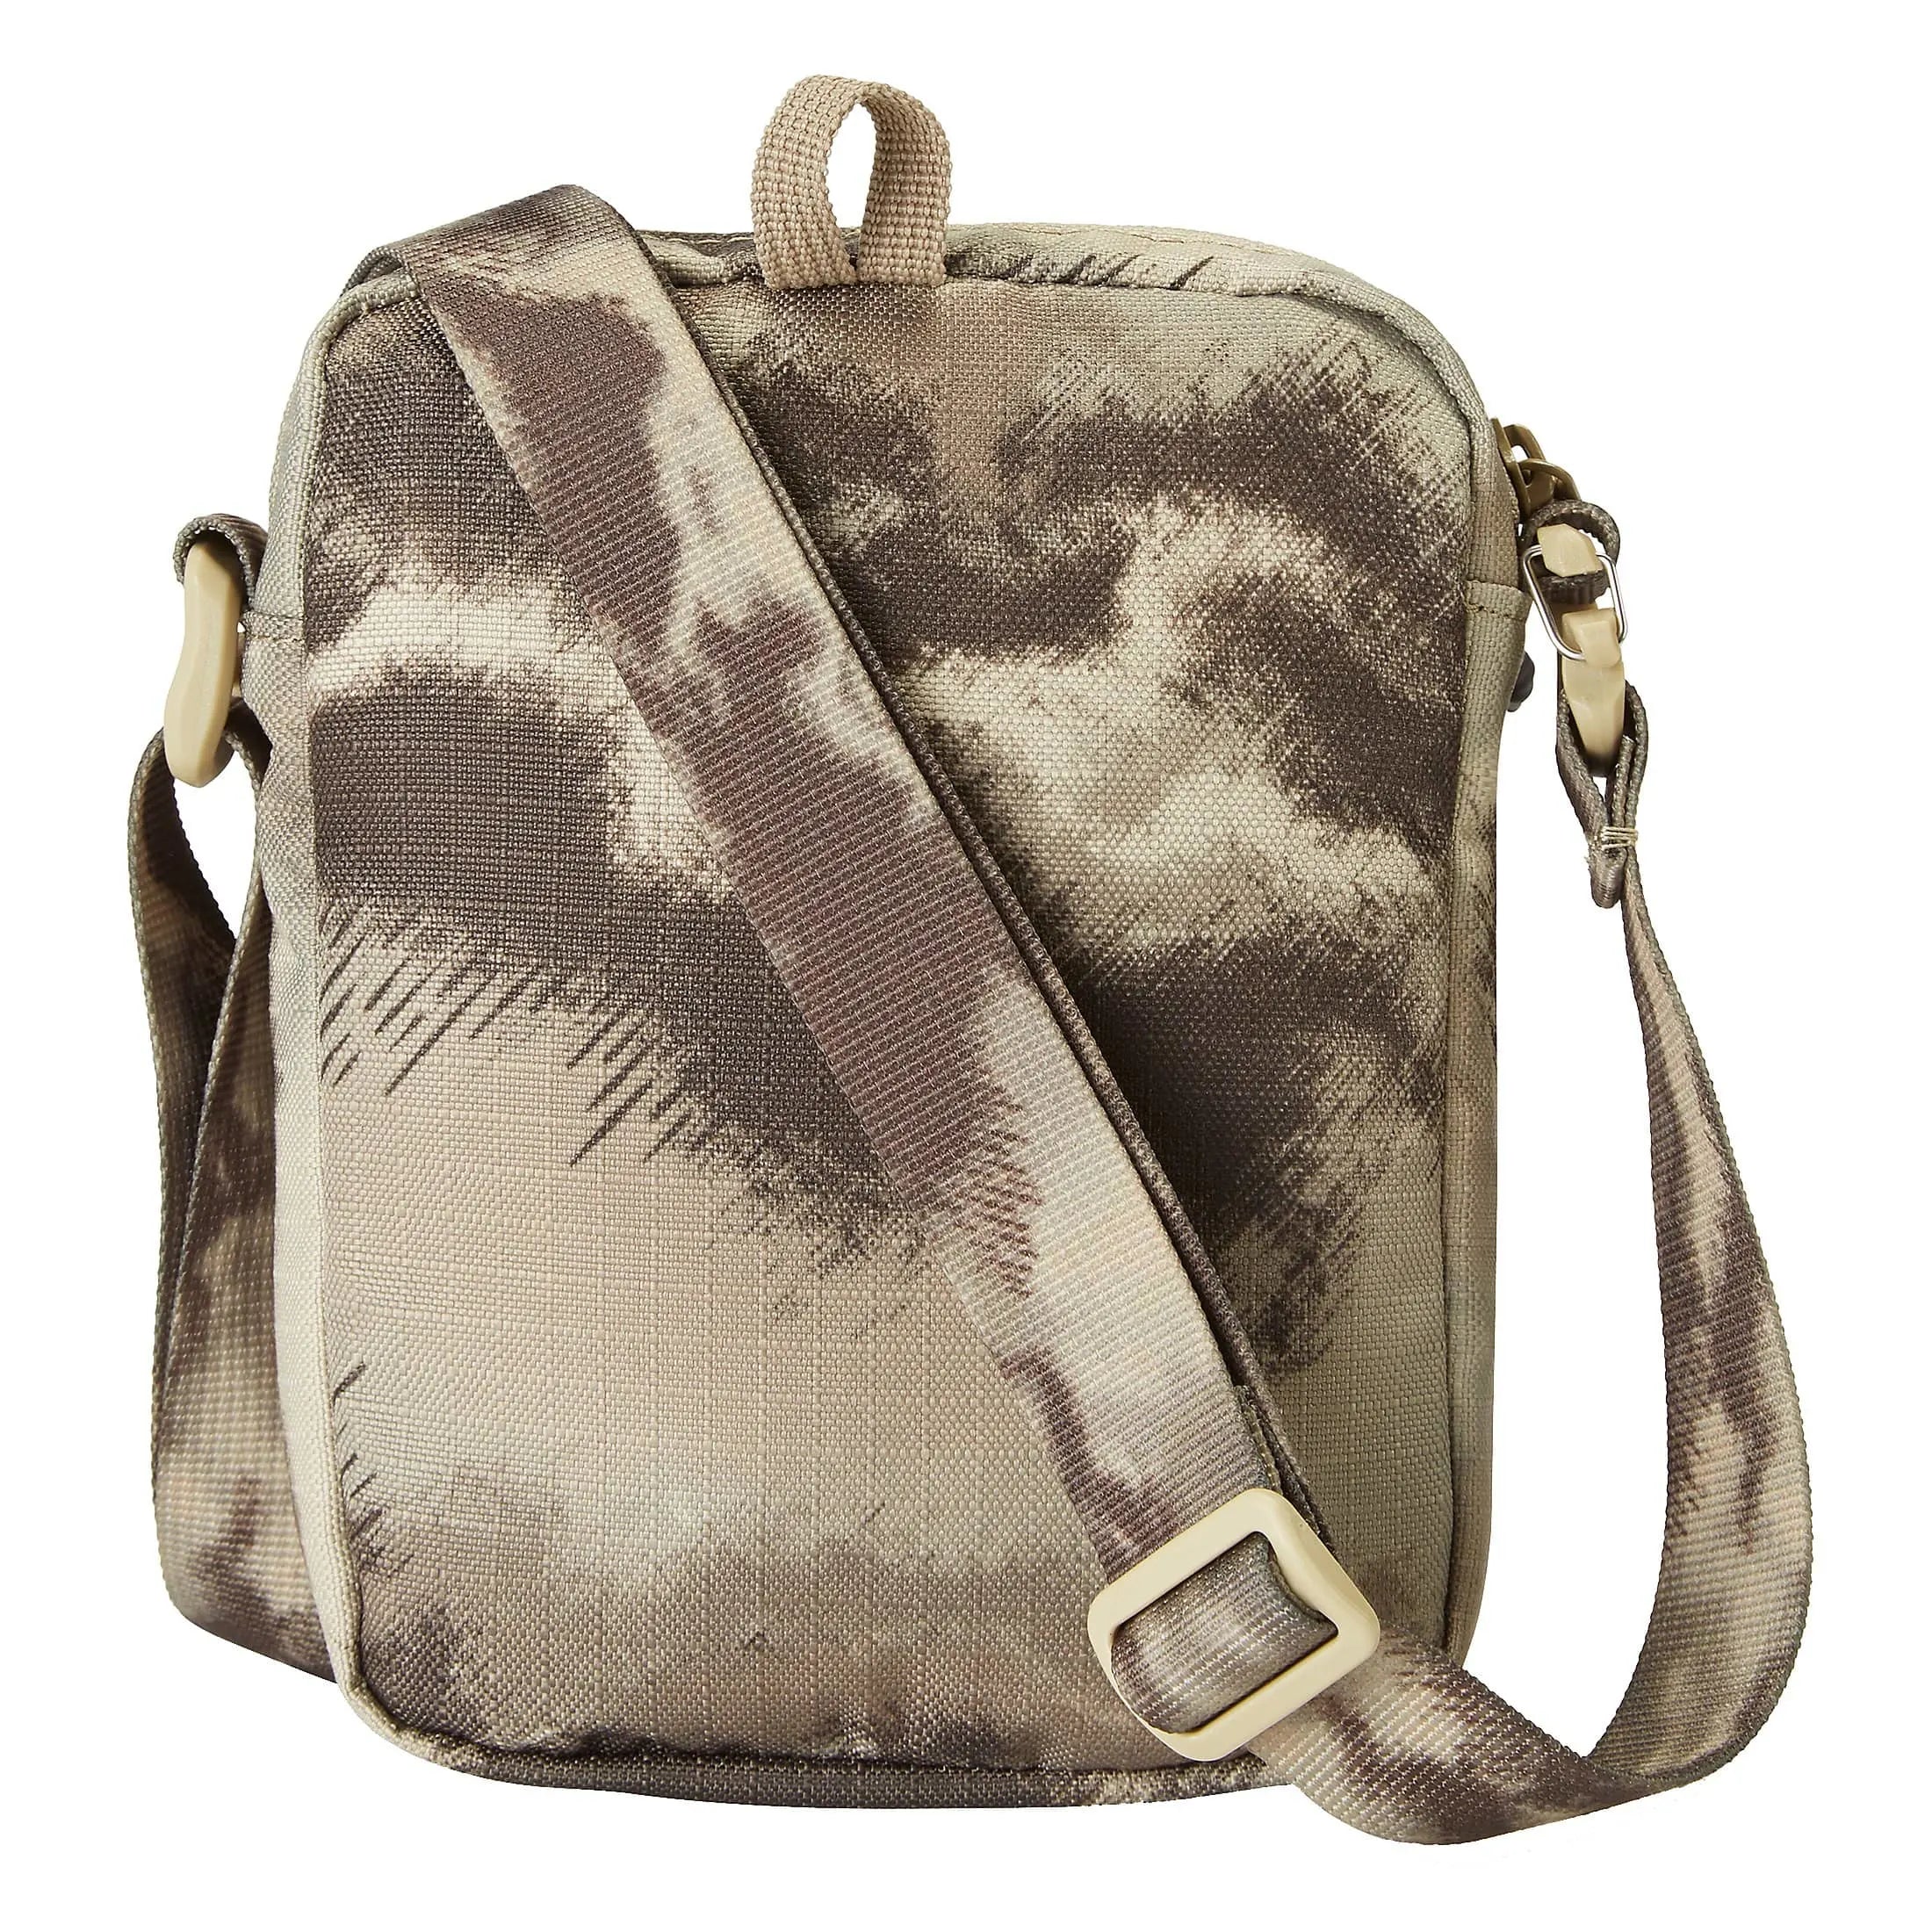 Dakine Packs & Bags Field Bag Handbag 18 cm - ashcroft camo